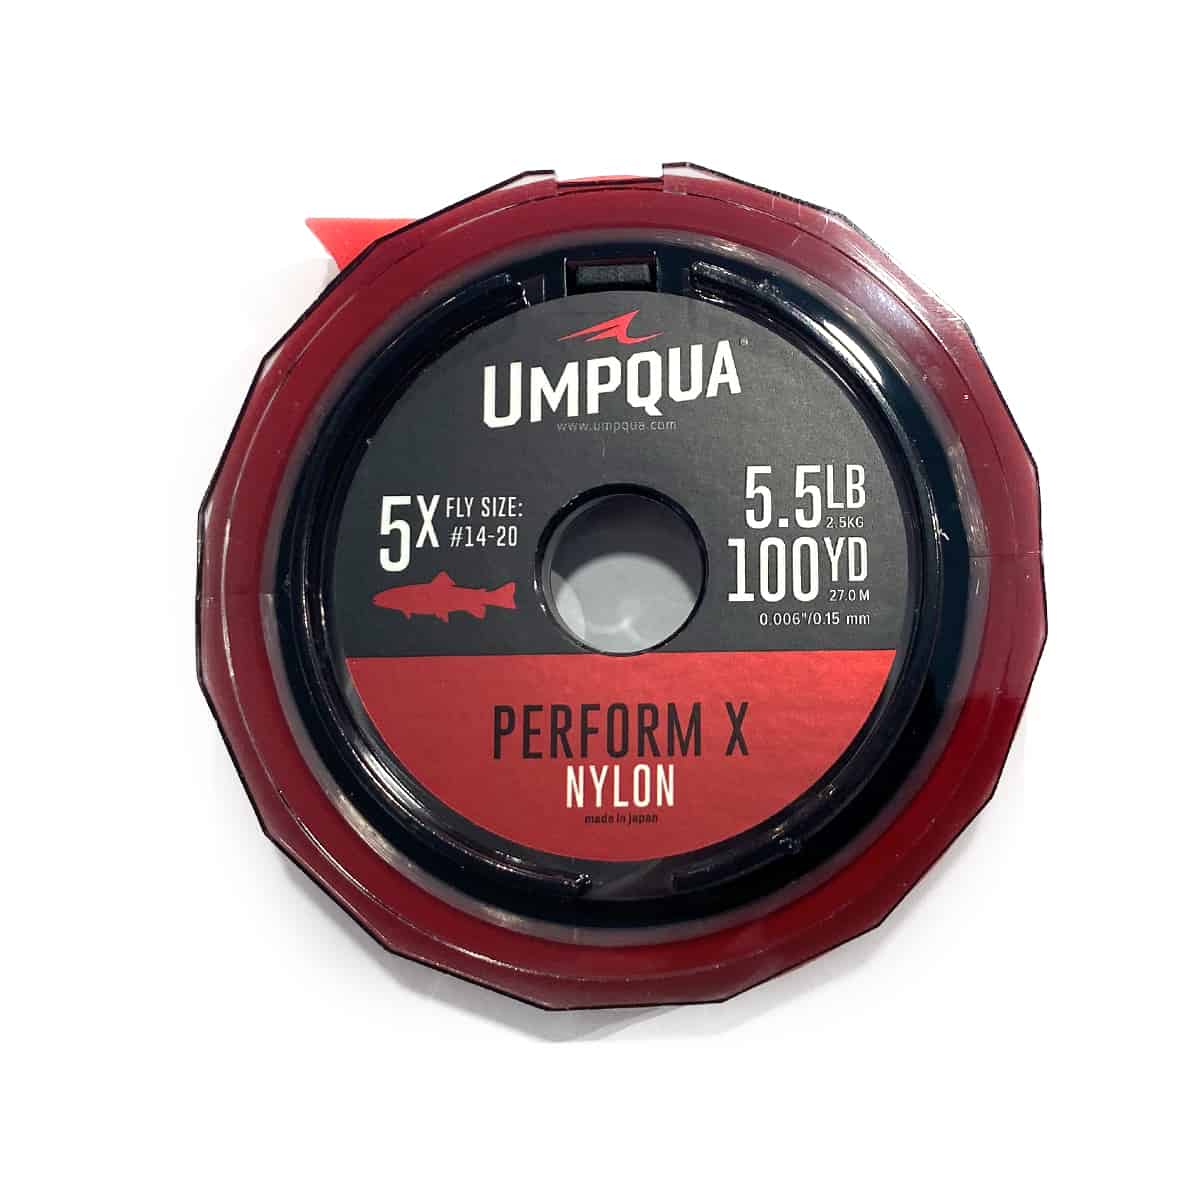 Umpqua Perform x Trout Nylon Tippet 100yds - 3X